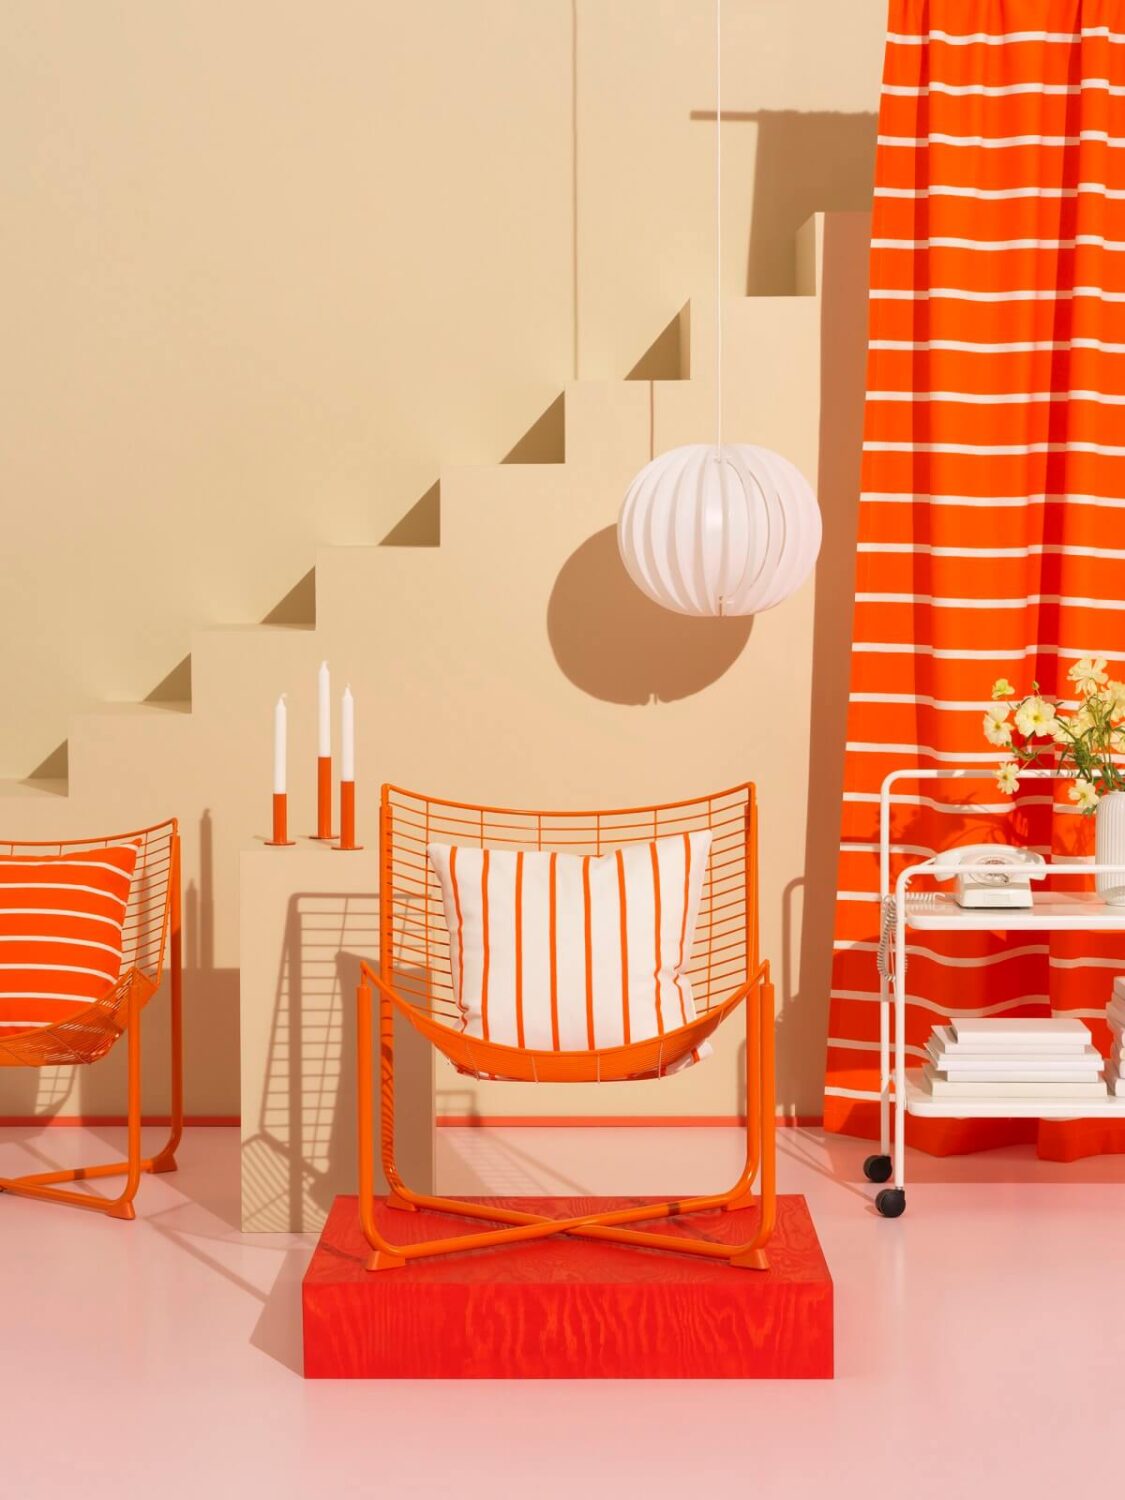 IKEA-Nytillverkad-collection-part-two-orange-tones-nordroom